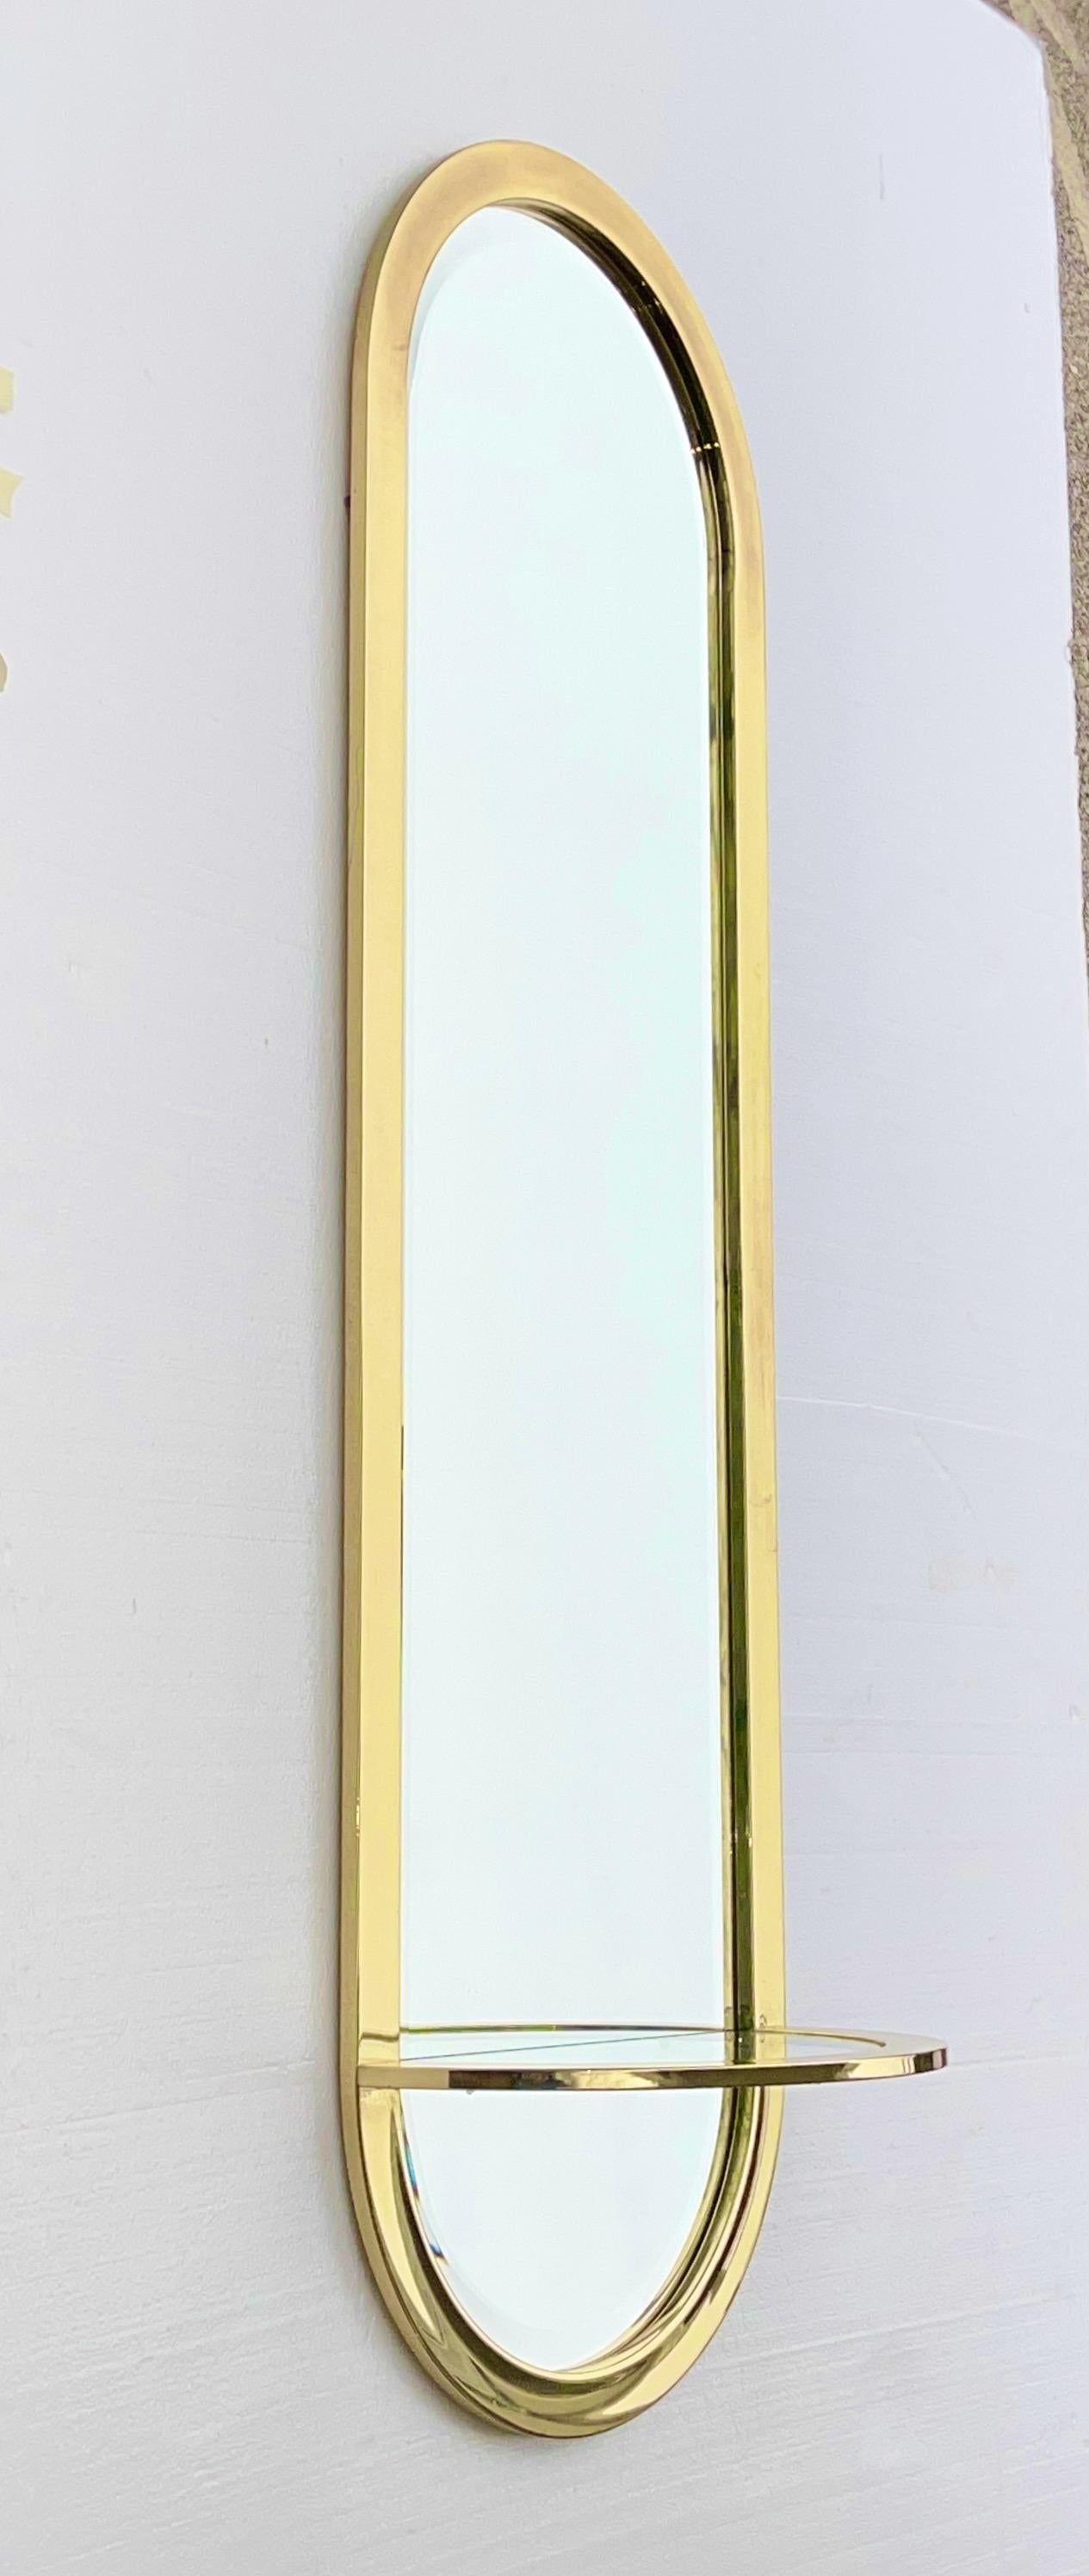 American DIA Design Institute America Brass Racetrack Oval Mirror with Demilune Shelf For Sale